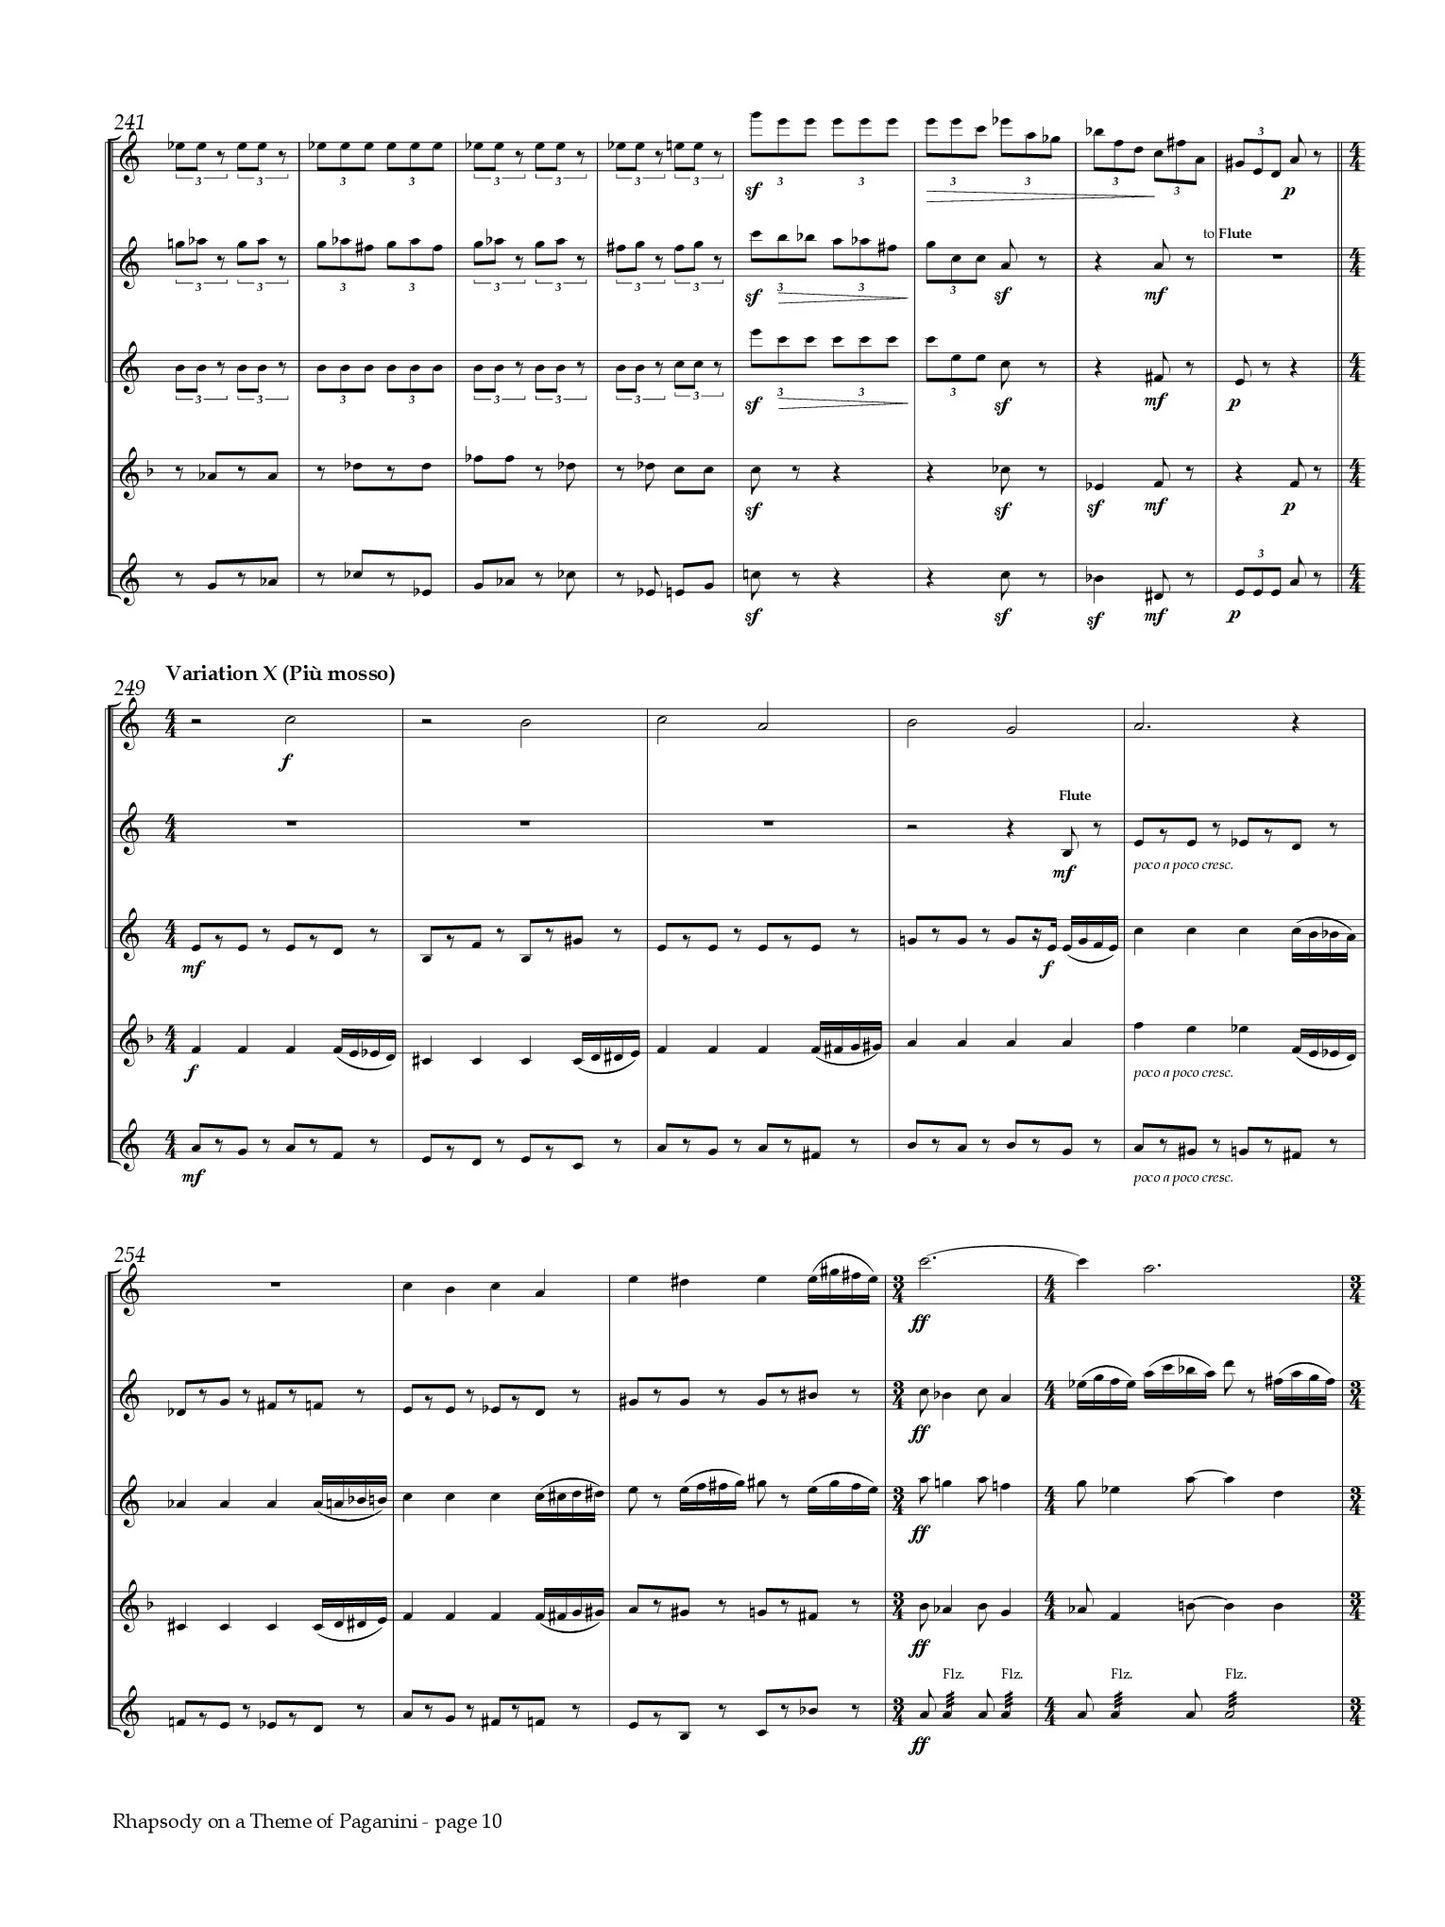 Rachmaninoff (arr. Hinze) - Rhapsody on a Theme of Paganini (Flute Choir)